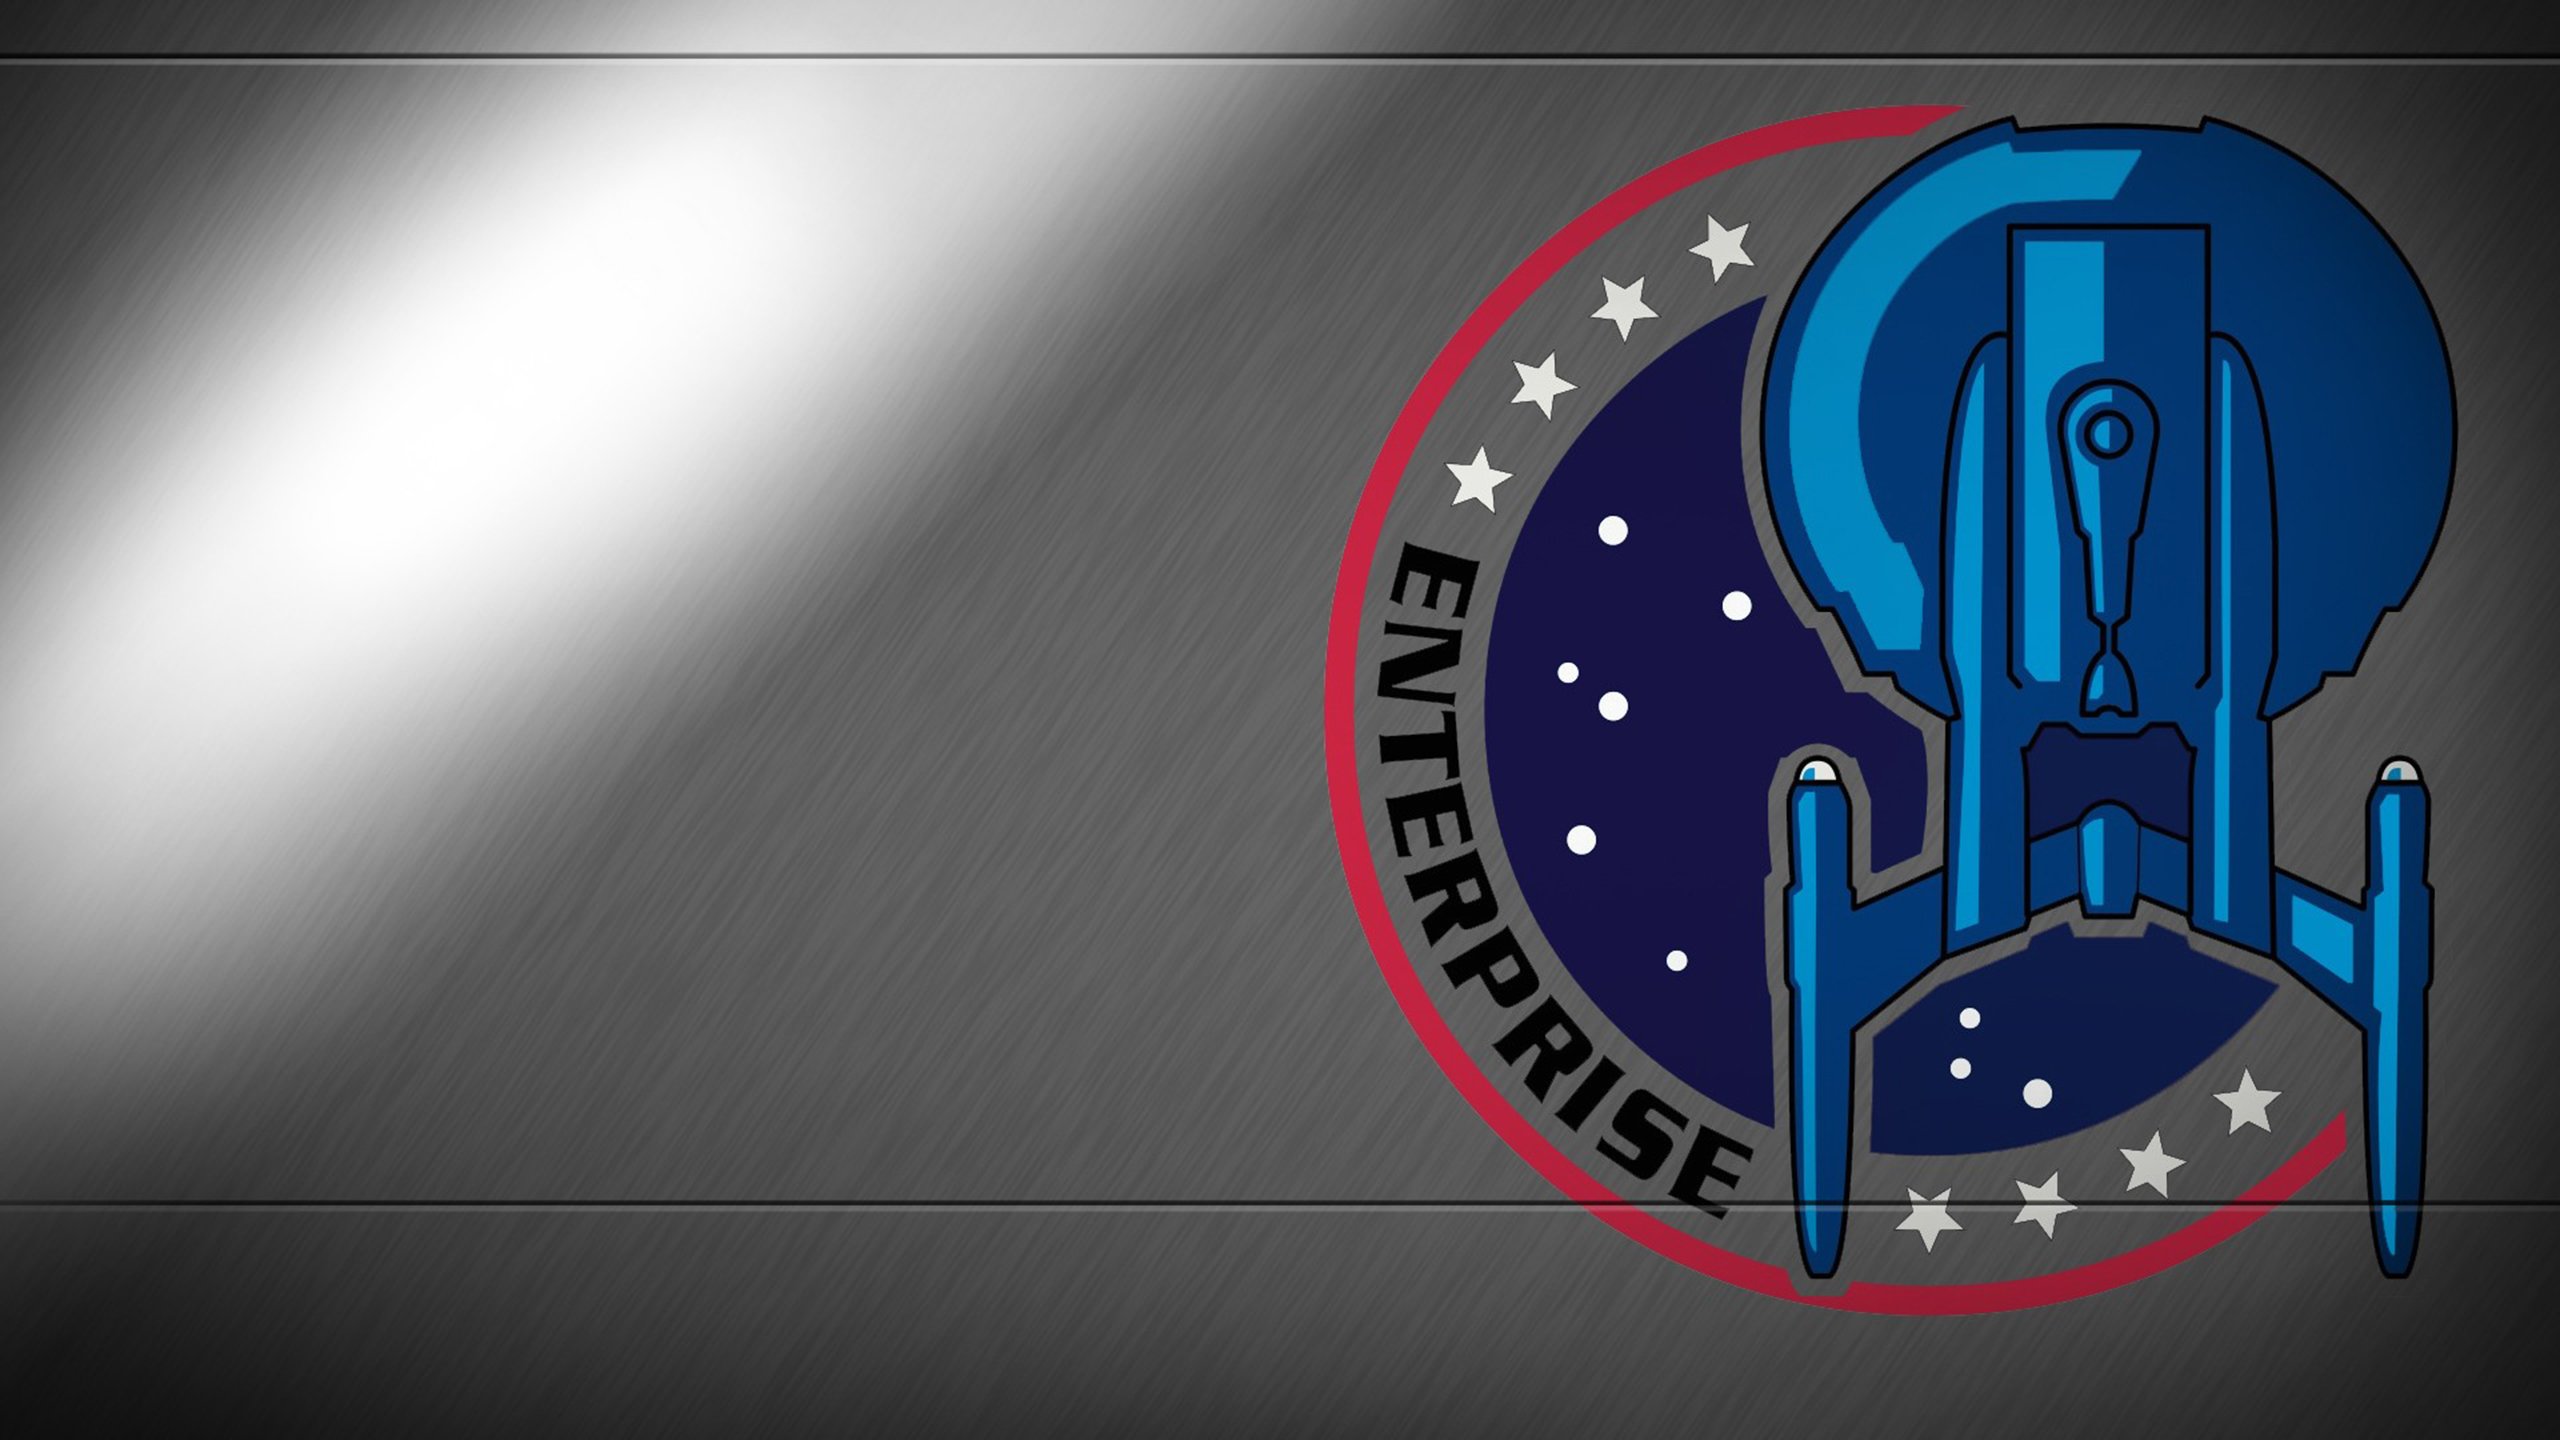 Star Trek Enterprise logo wallpaper | 2560x1440 | 397828 | WallpaperUP